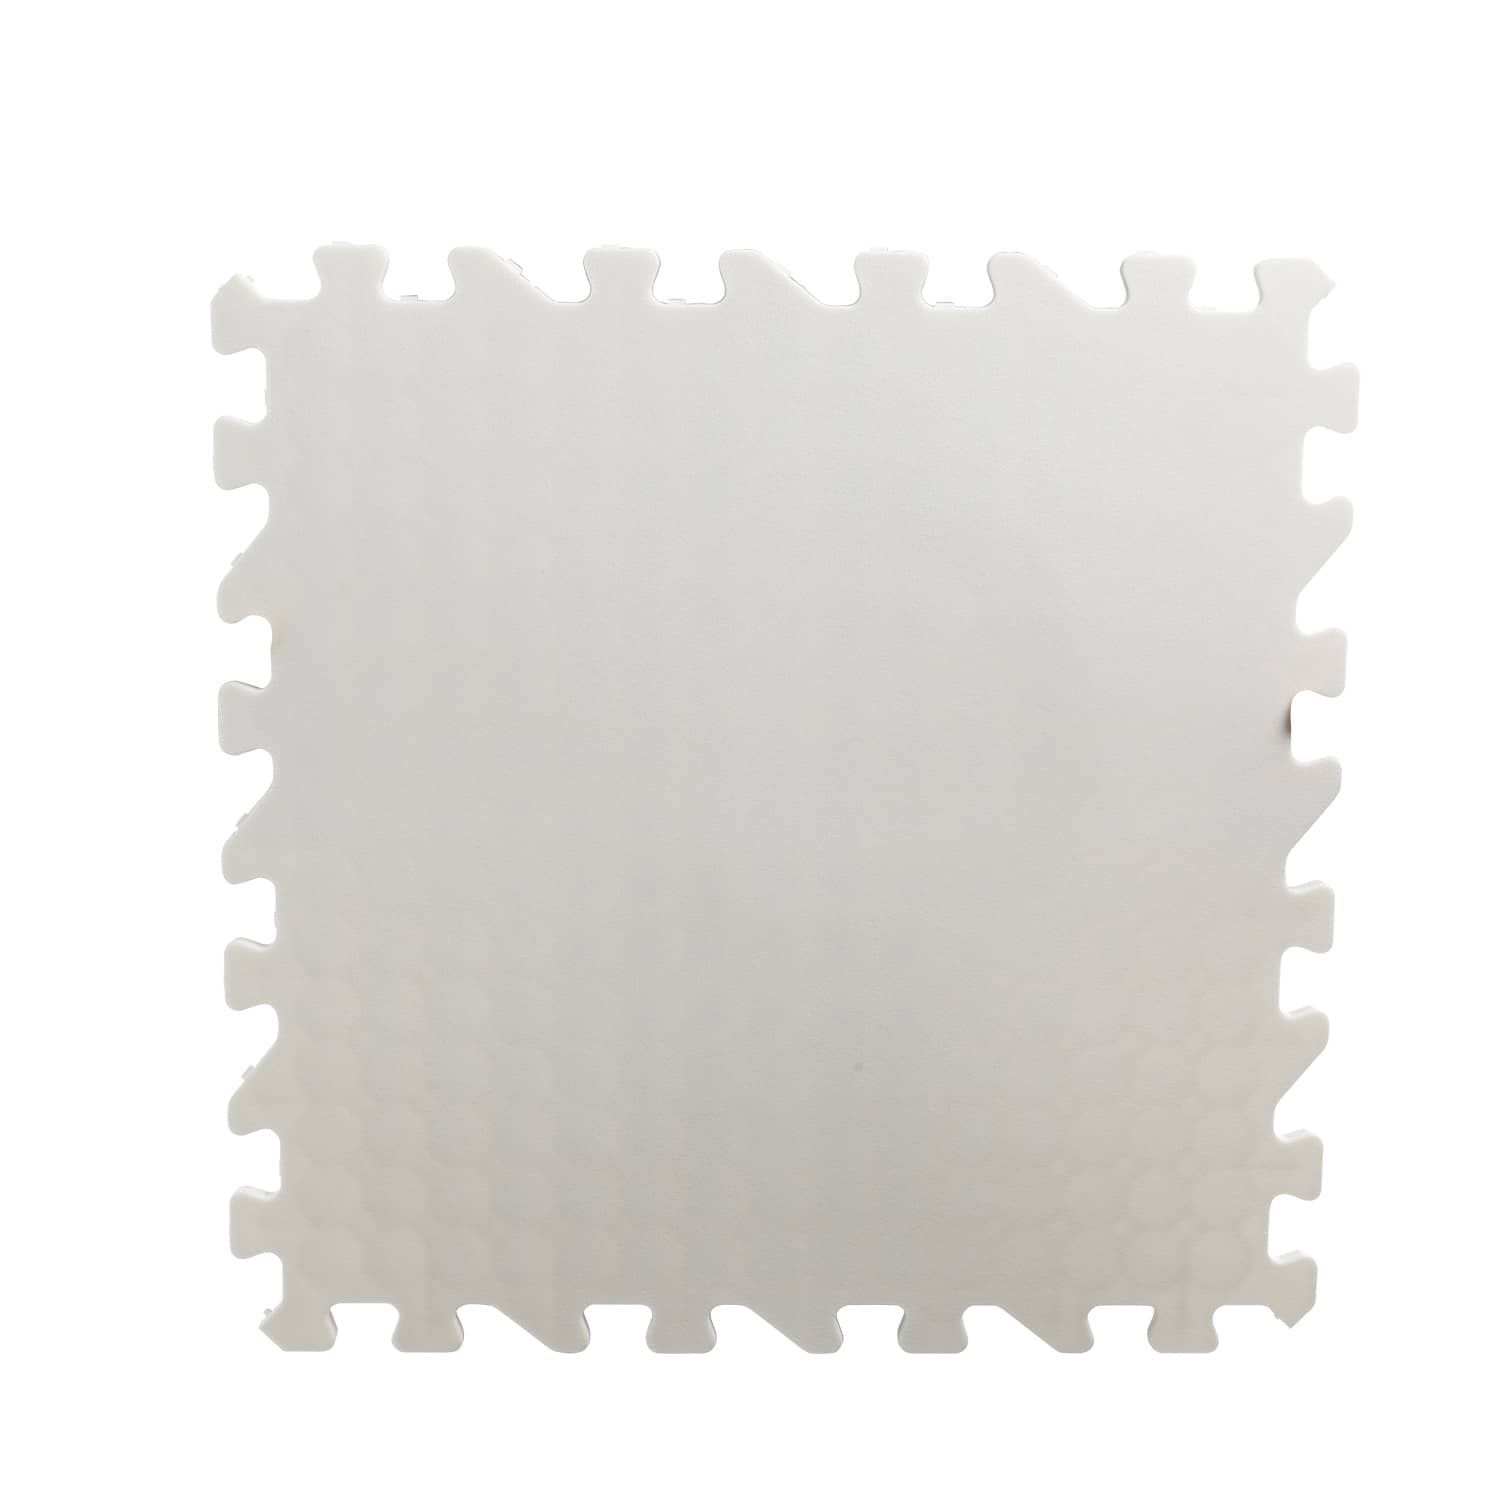 Bauer Dryland Synthetic Ice Tiles - 25er Pack 46x46 cm/Tile